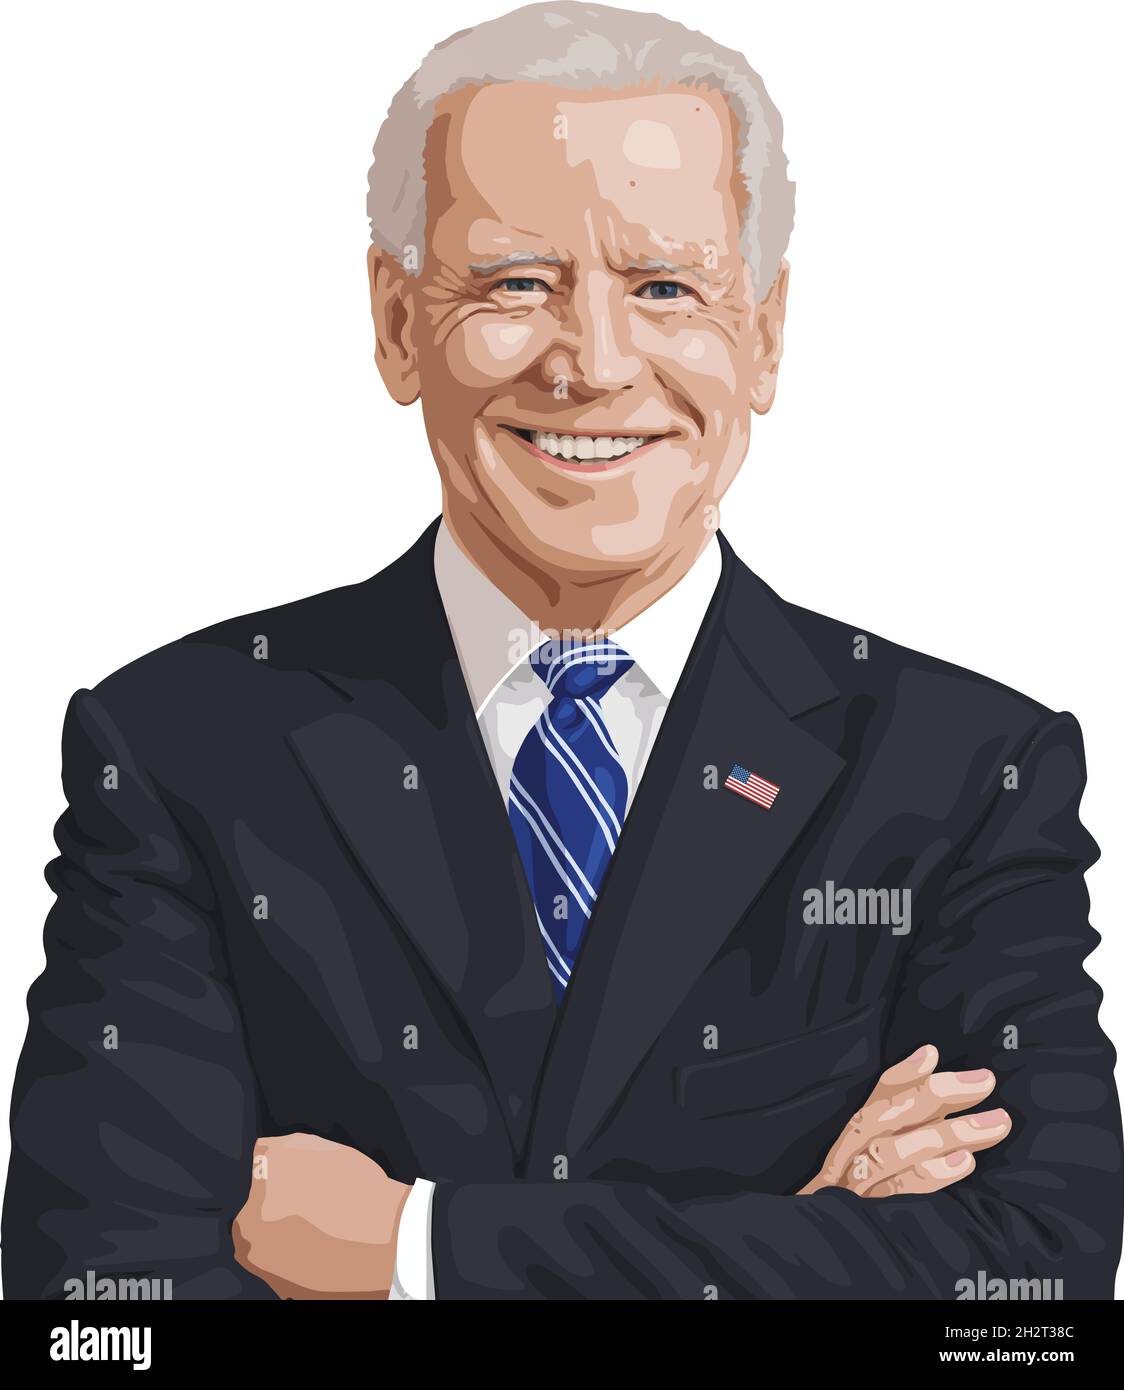 Joe Biden President of the United States 2021 Stock Vector